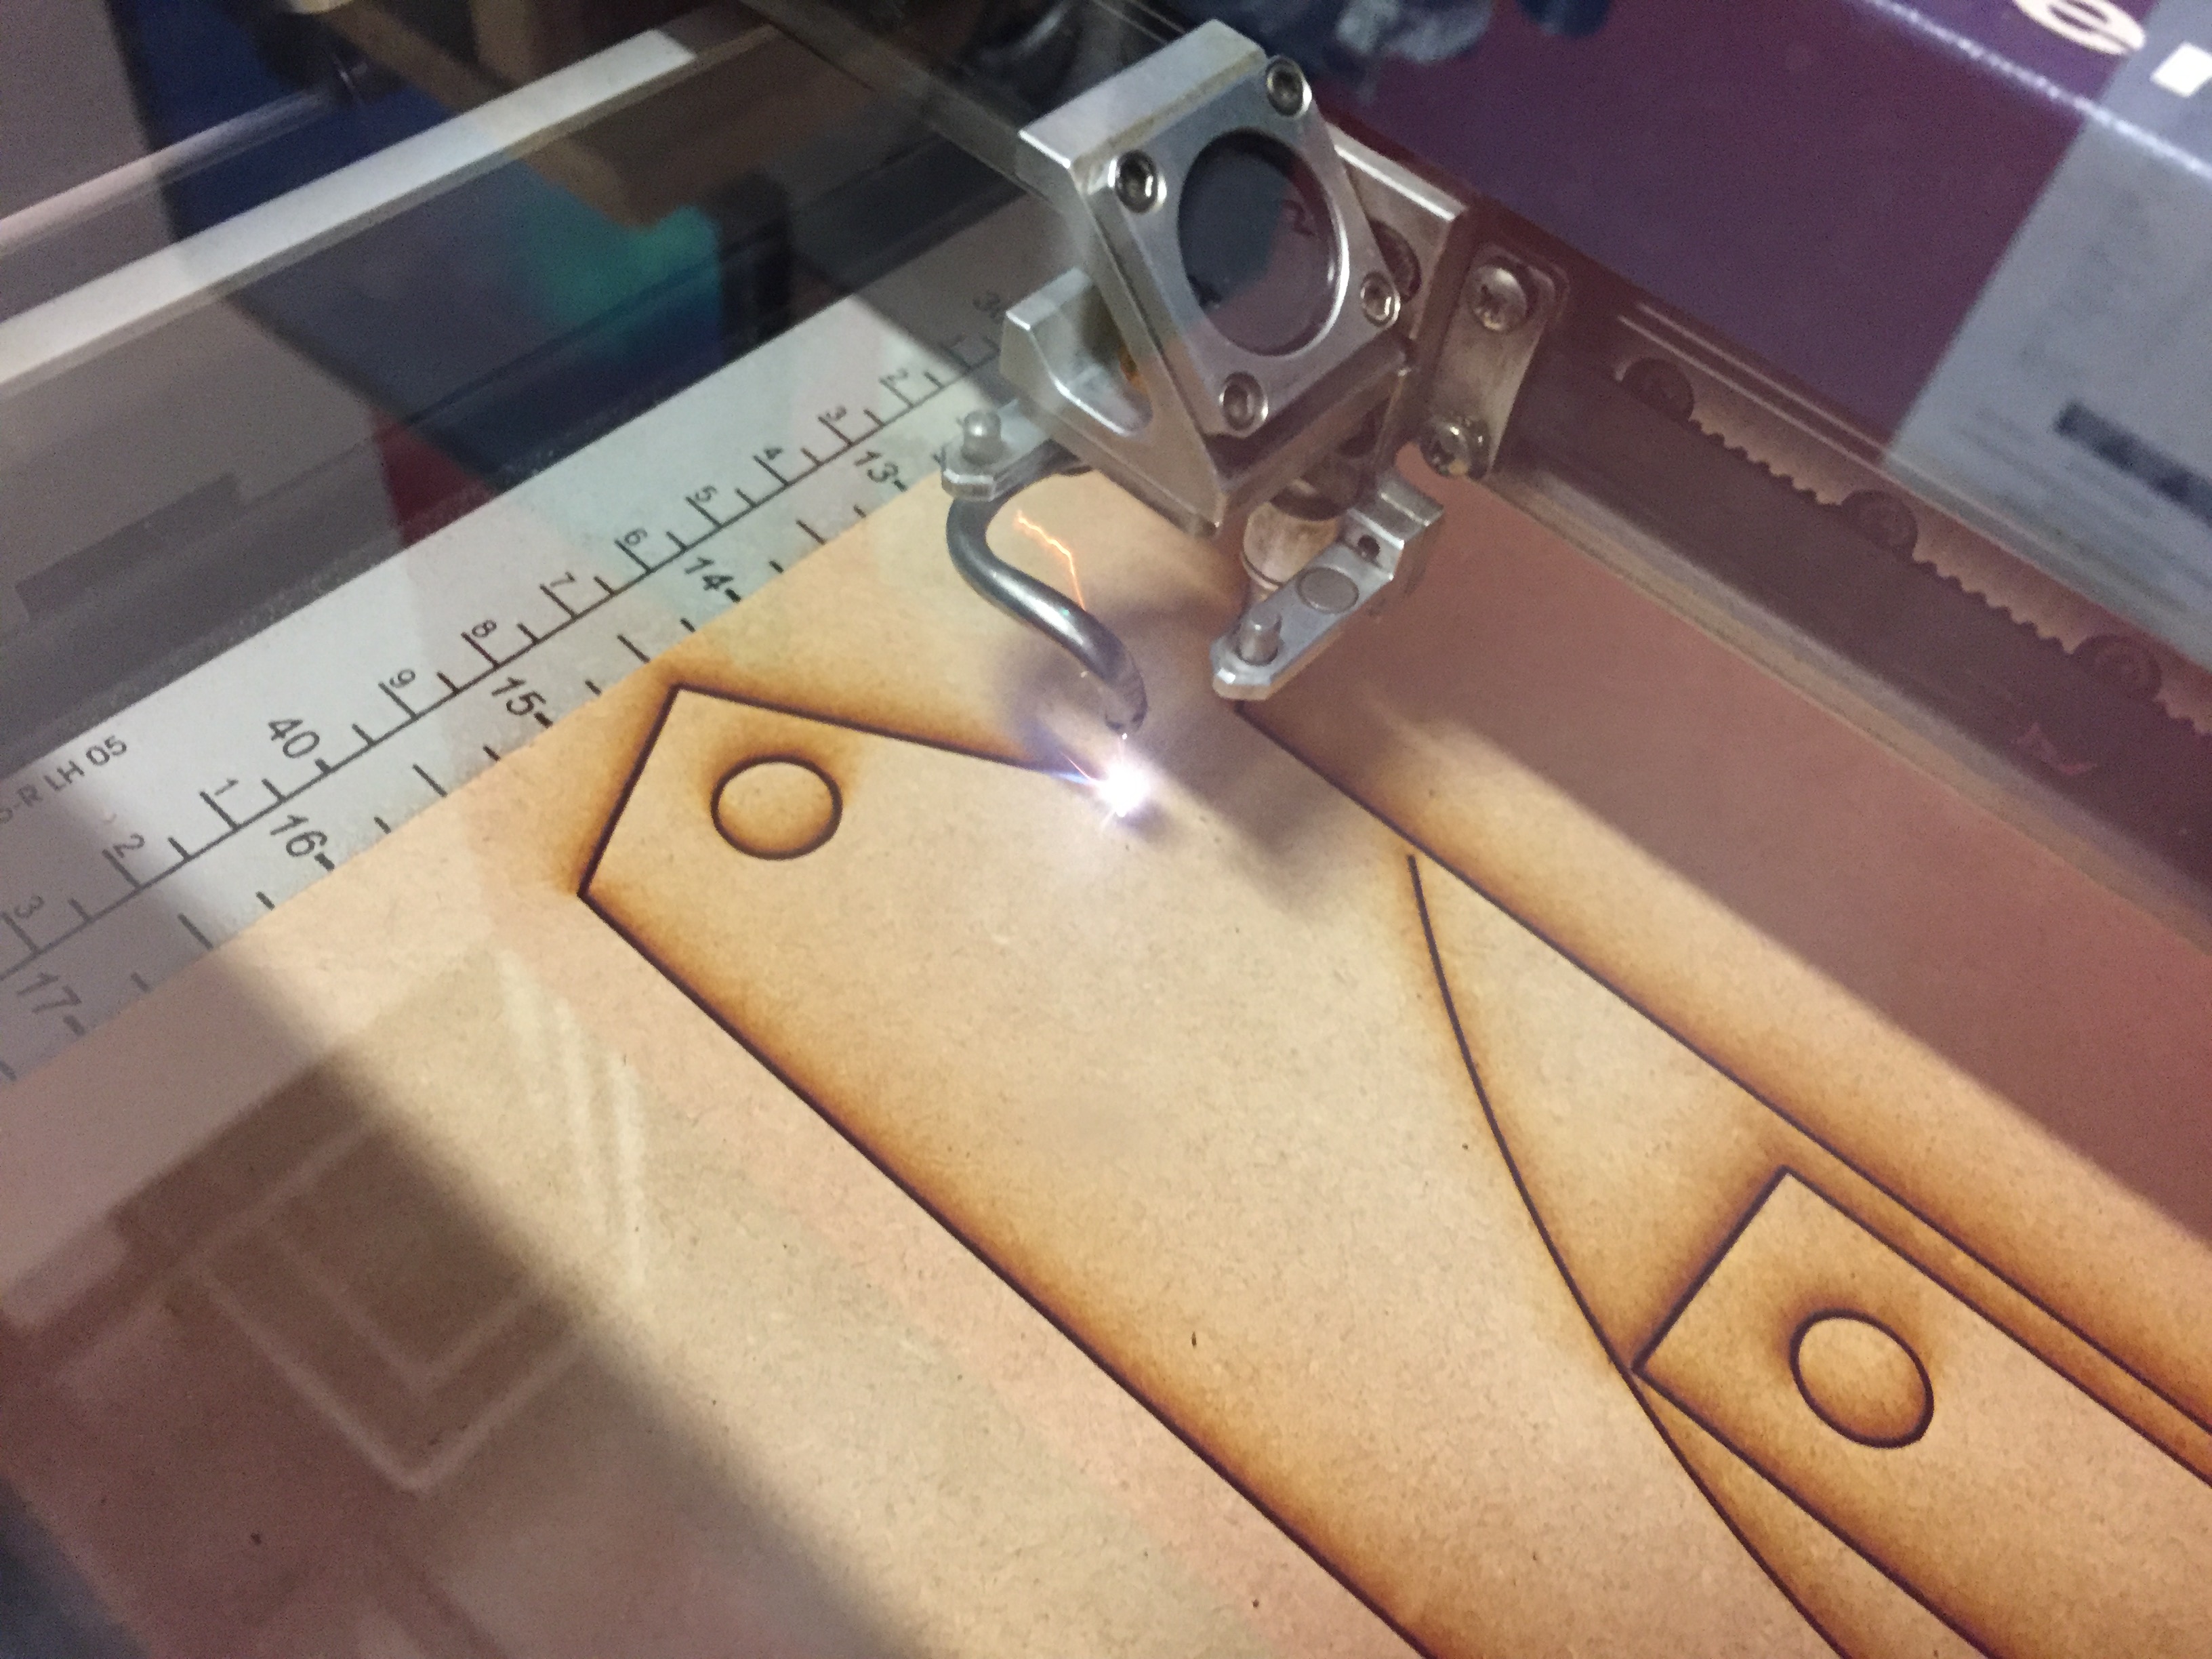 Enginursday: Light Up Your 3D Printer's Bed - News - SparkFun Electronics